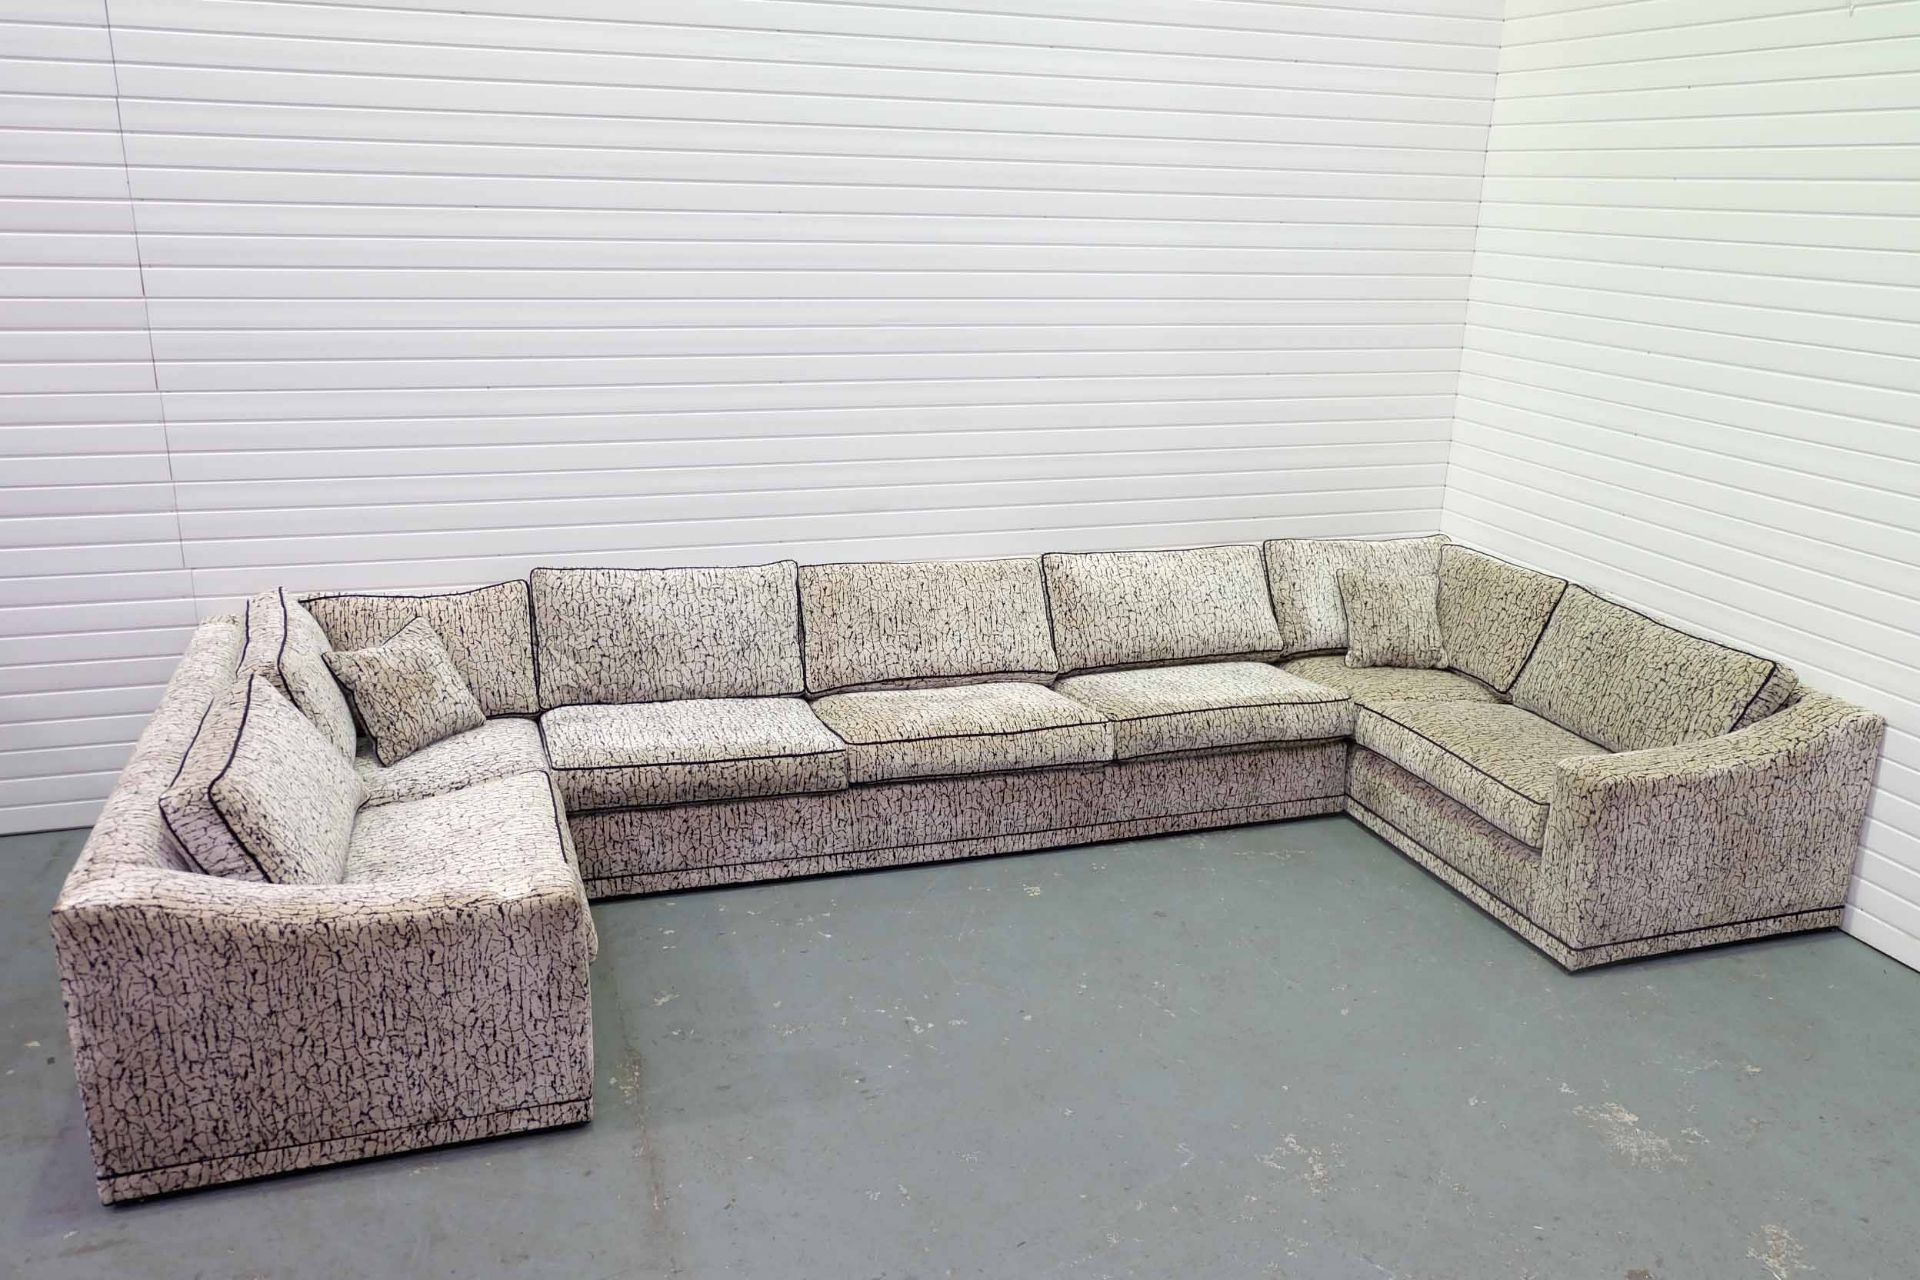 Gascoigne '5th Avenue' Range Sofa. Size 5m x 2.2m.